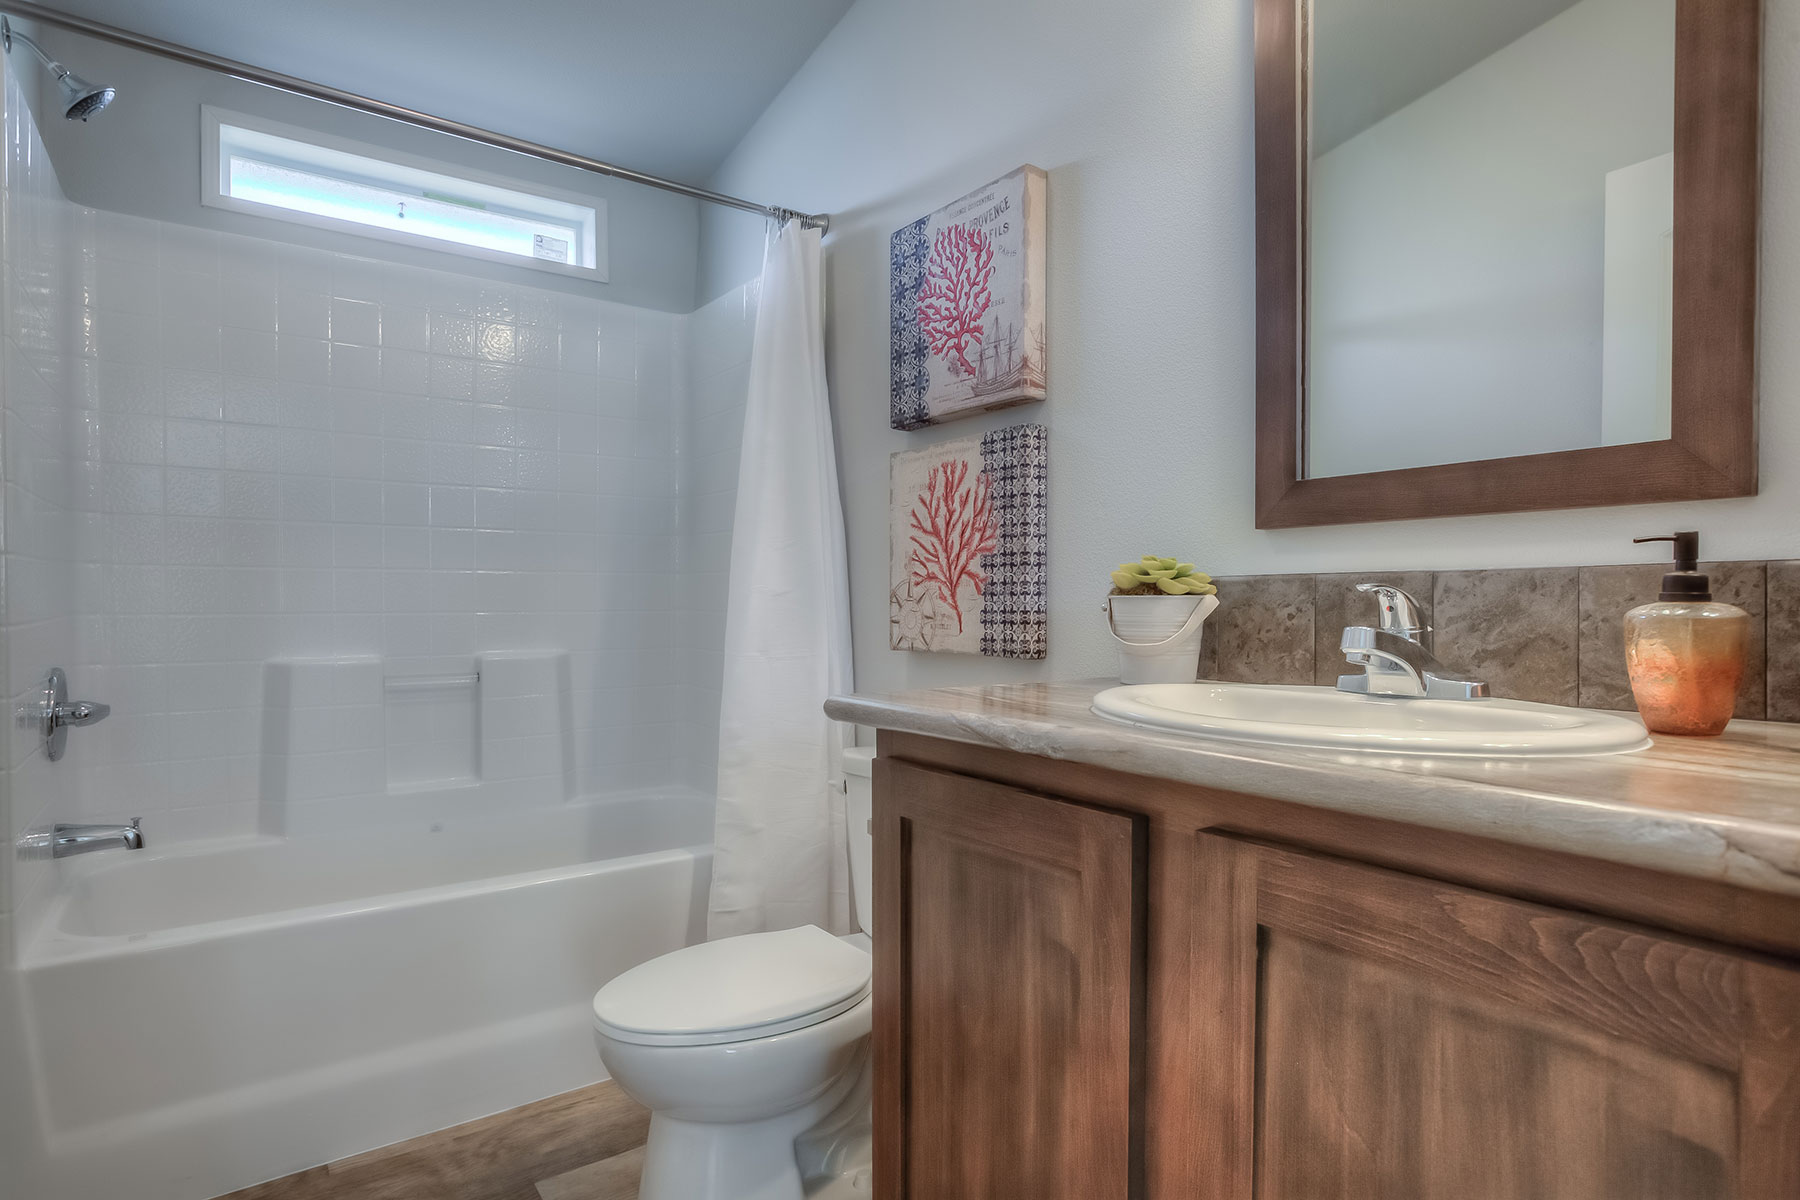 Skyline Homes Westridge 1222CT Manufactured Home Second bathroom featuring single vanity, shower bath, toilet